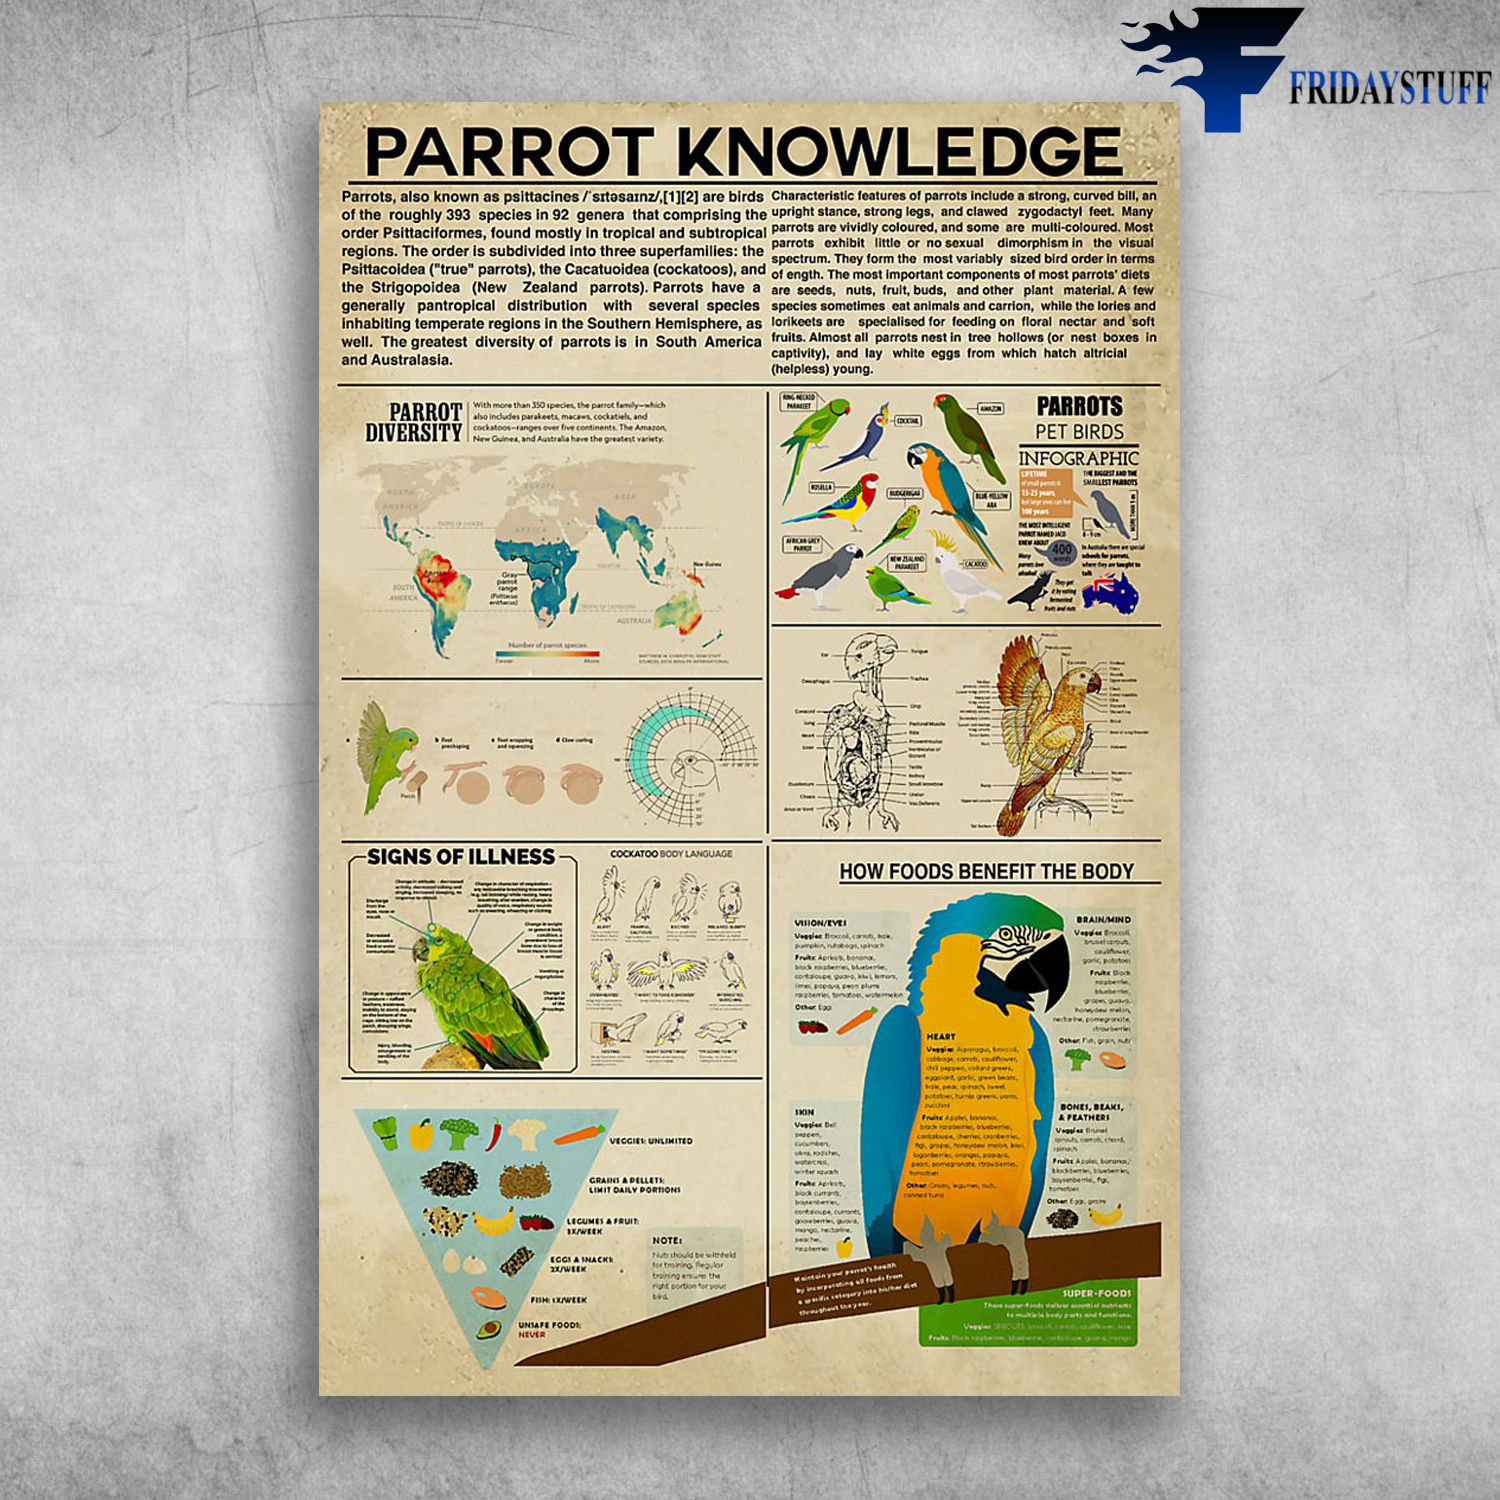 Parrot Knowledge Parrot Diversity How Foods Benefit The Body Parrot